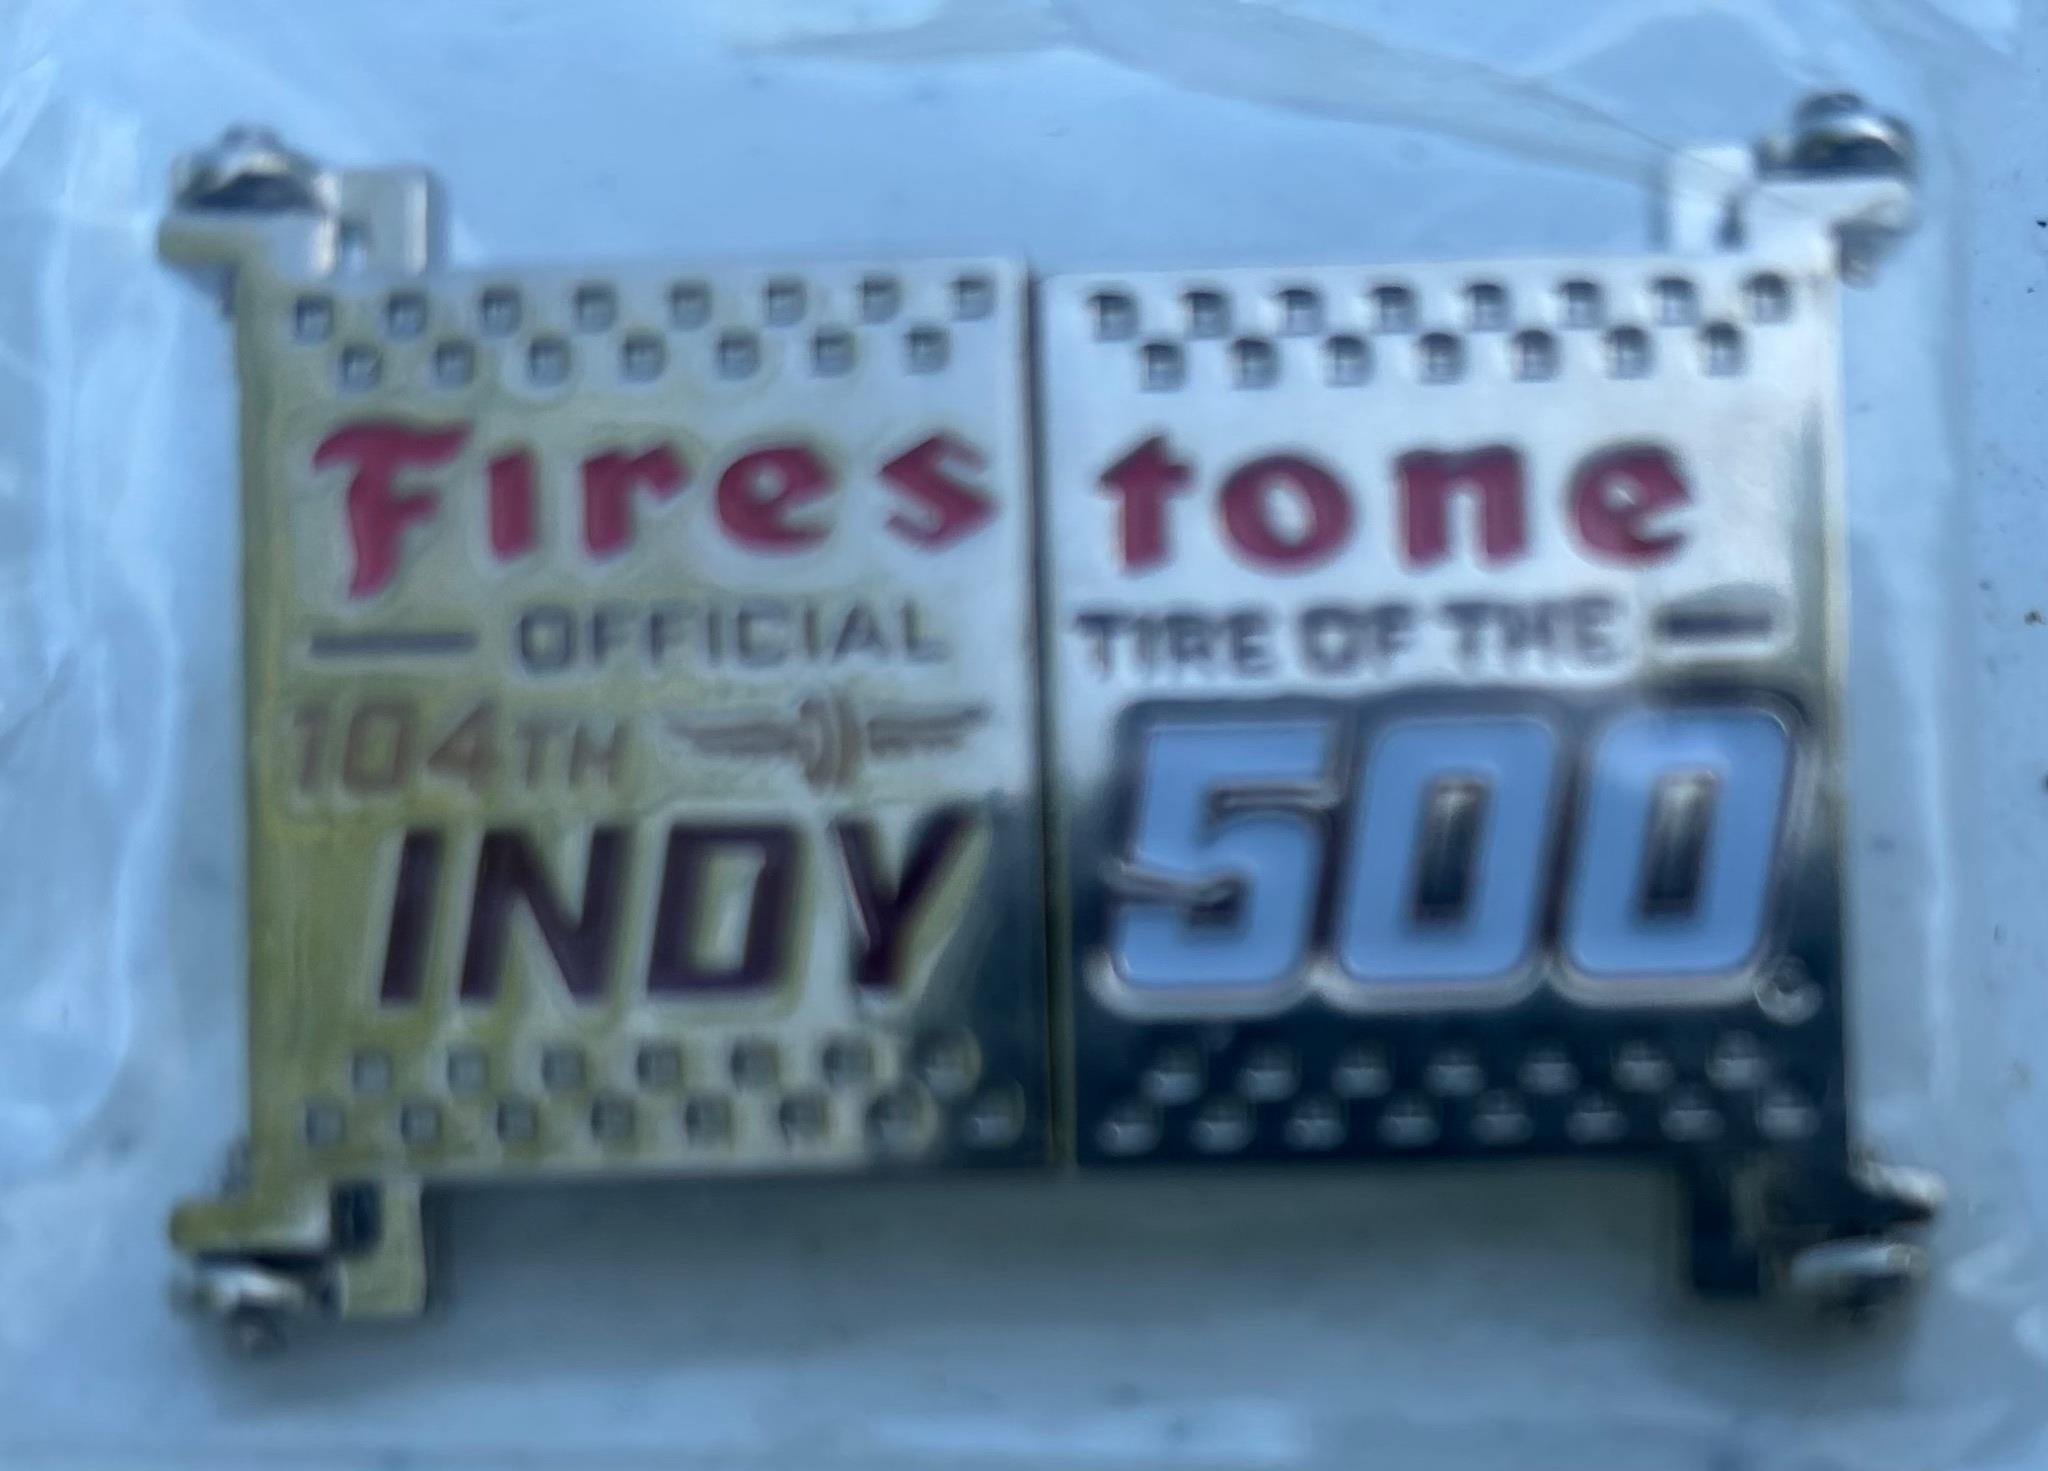 3 Indy 500 Licensed Pins Lim Ed numbered